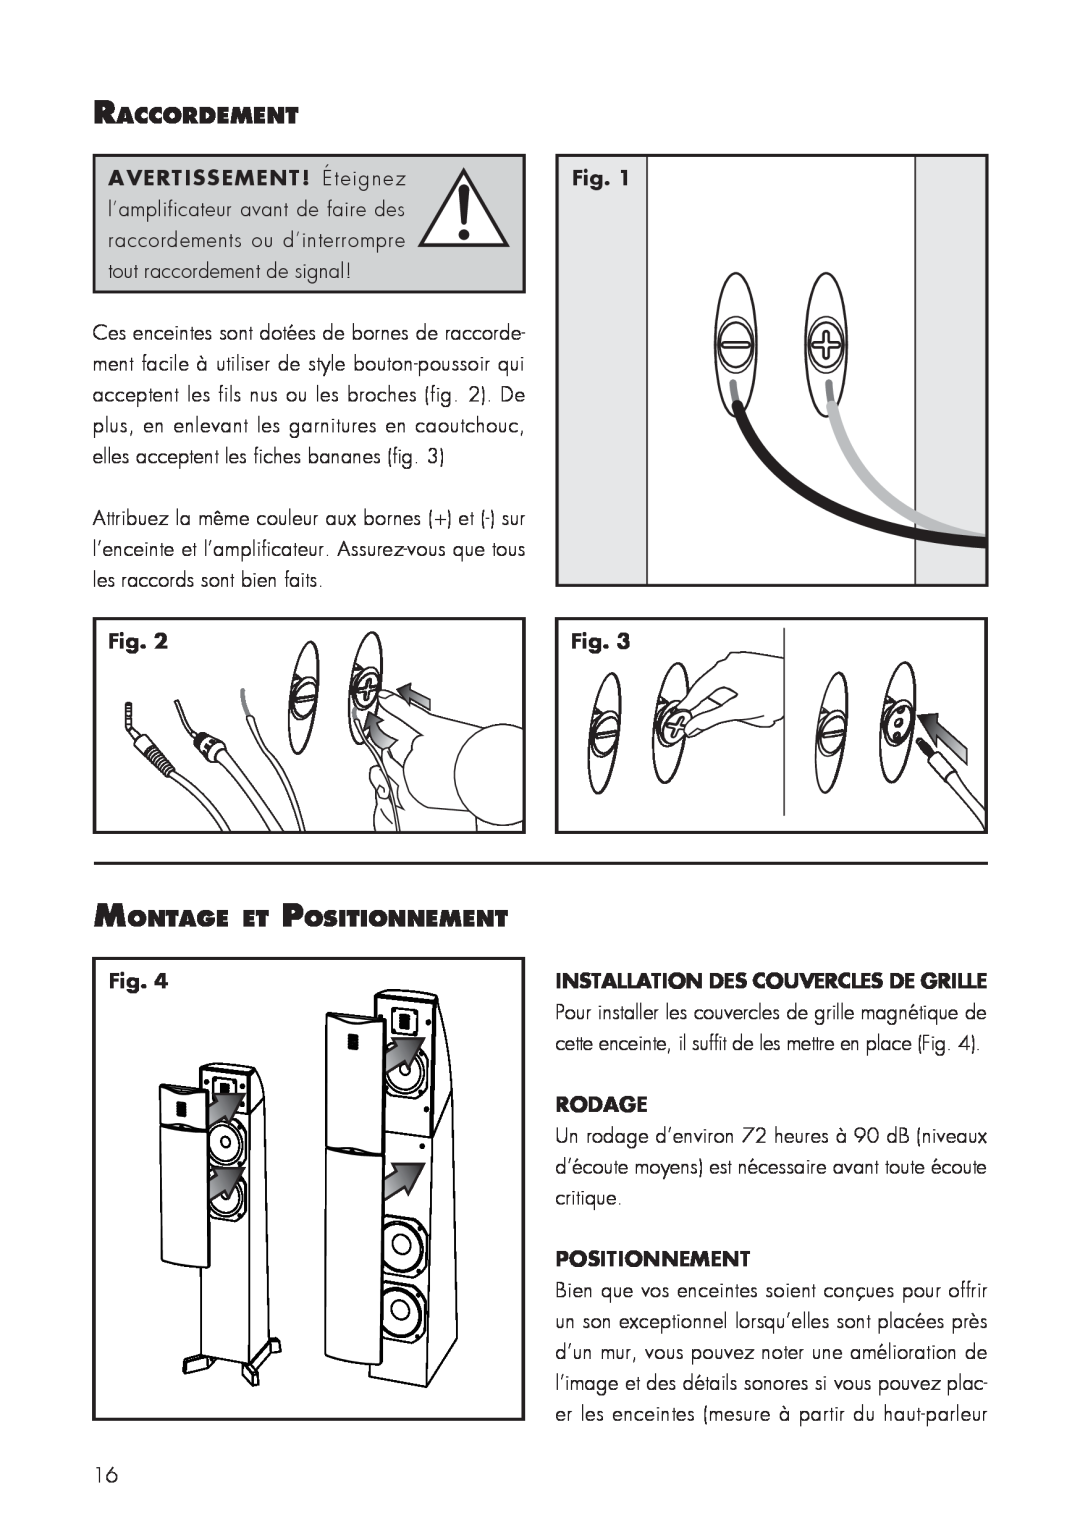 MartinLogan 12, 10 user manual Raccordement, Montage et Positionnement, Rodage, Fig 